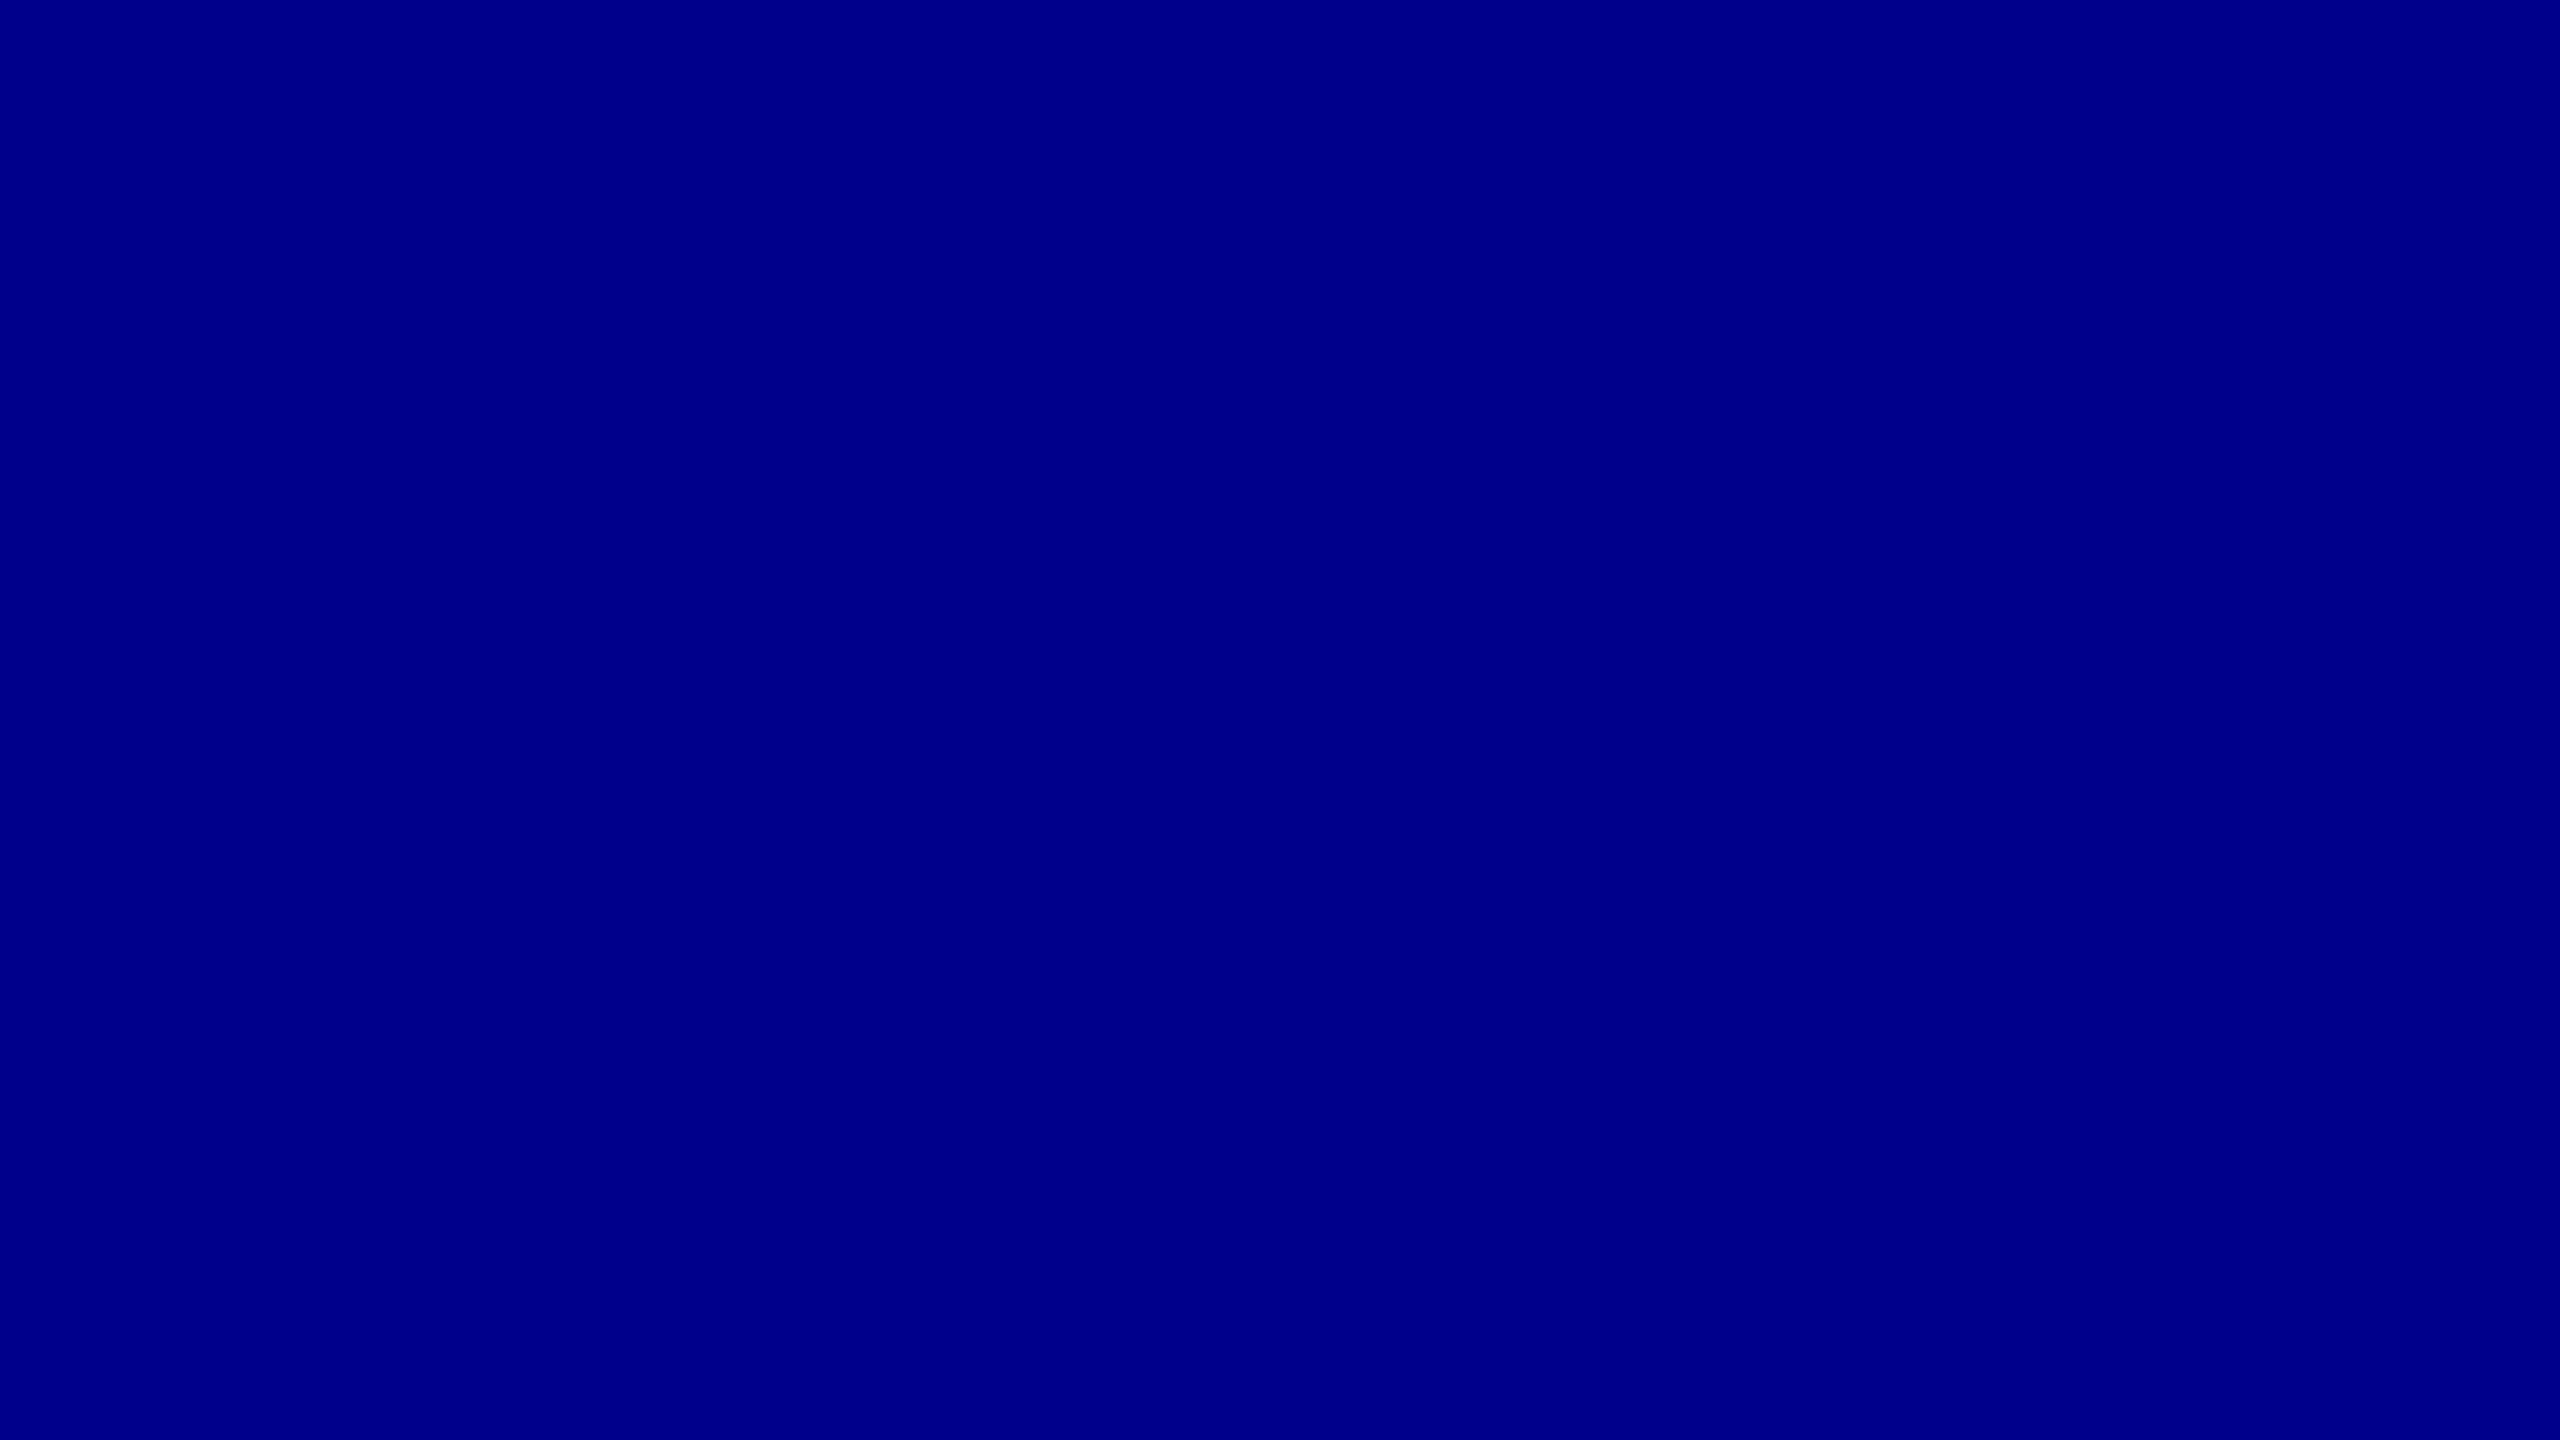 [74+] Dark Blue Background Images | Wallpapersafari.com